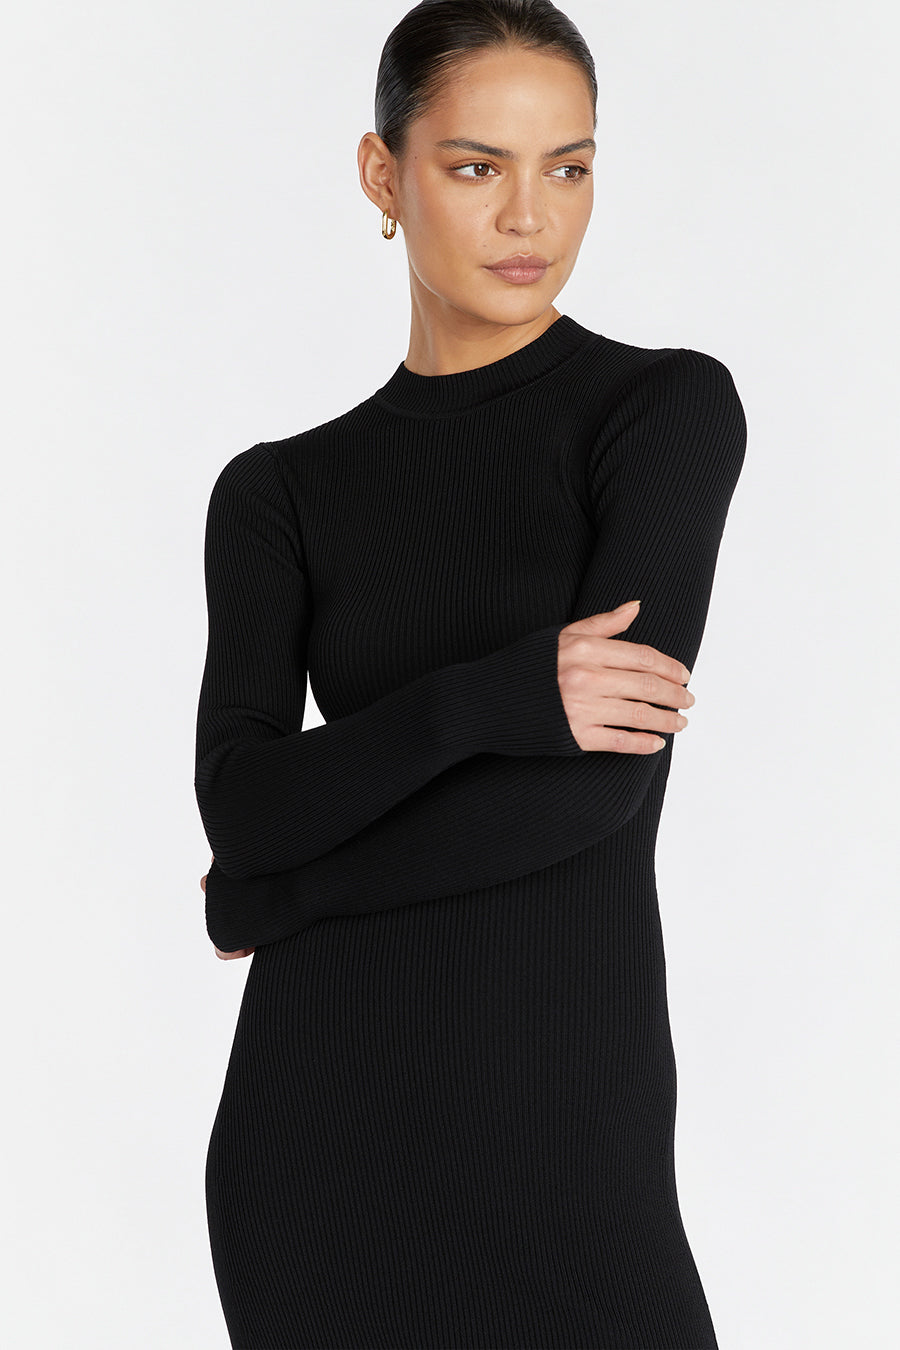 Buy Black Dresses for Women by Sqew Online | Ajio.com